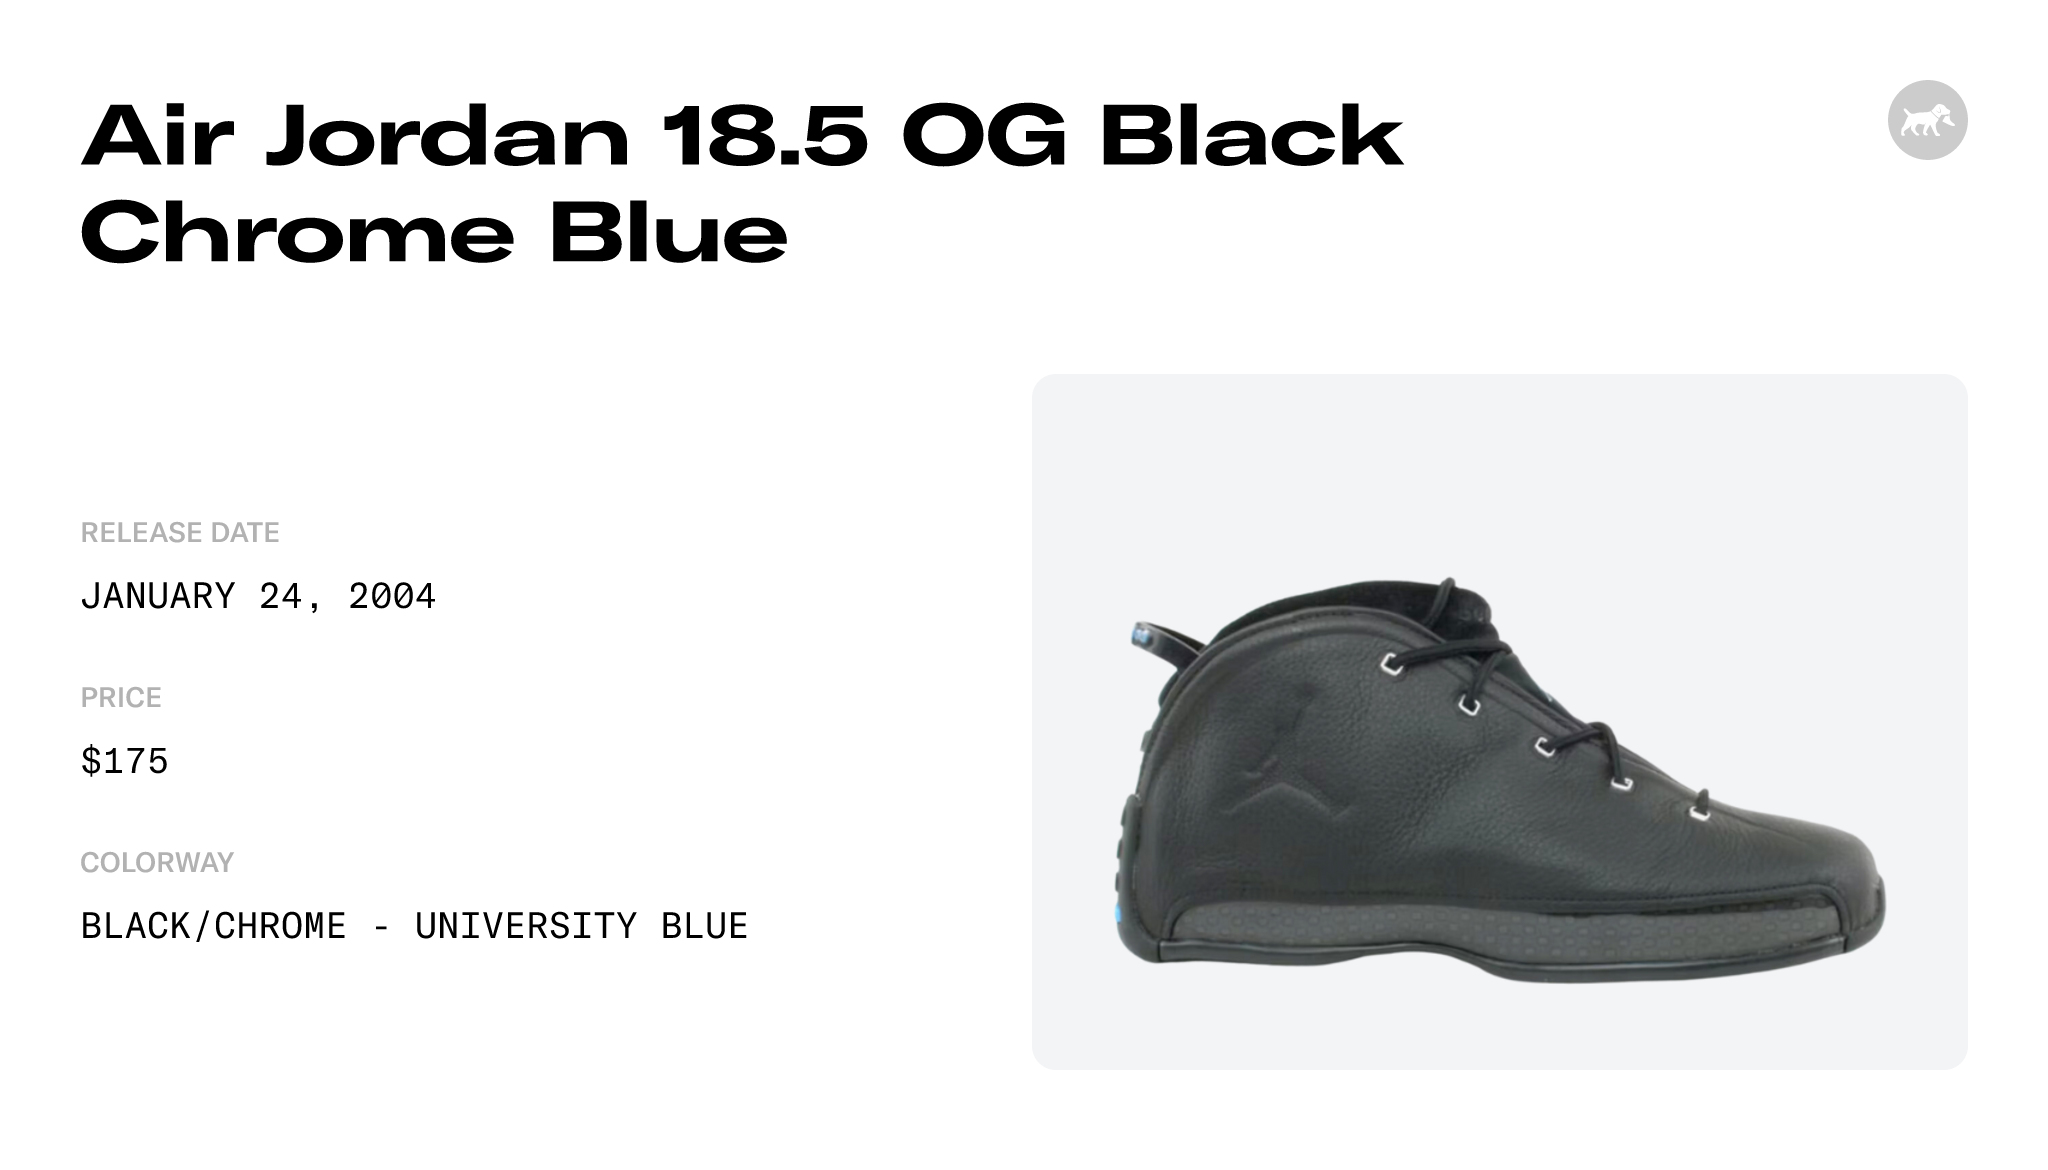 Air Jordan 18.5 OG Black Chrome Blue - 306890-002 Raffles and Release Date